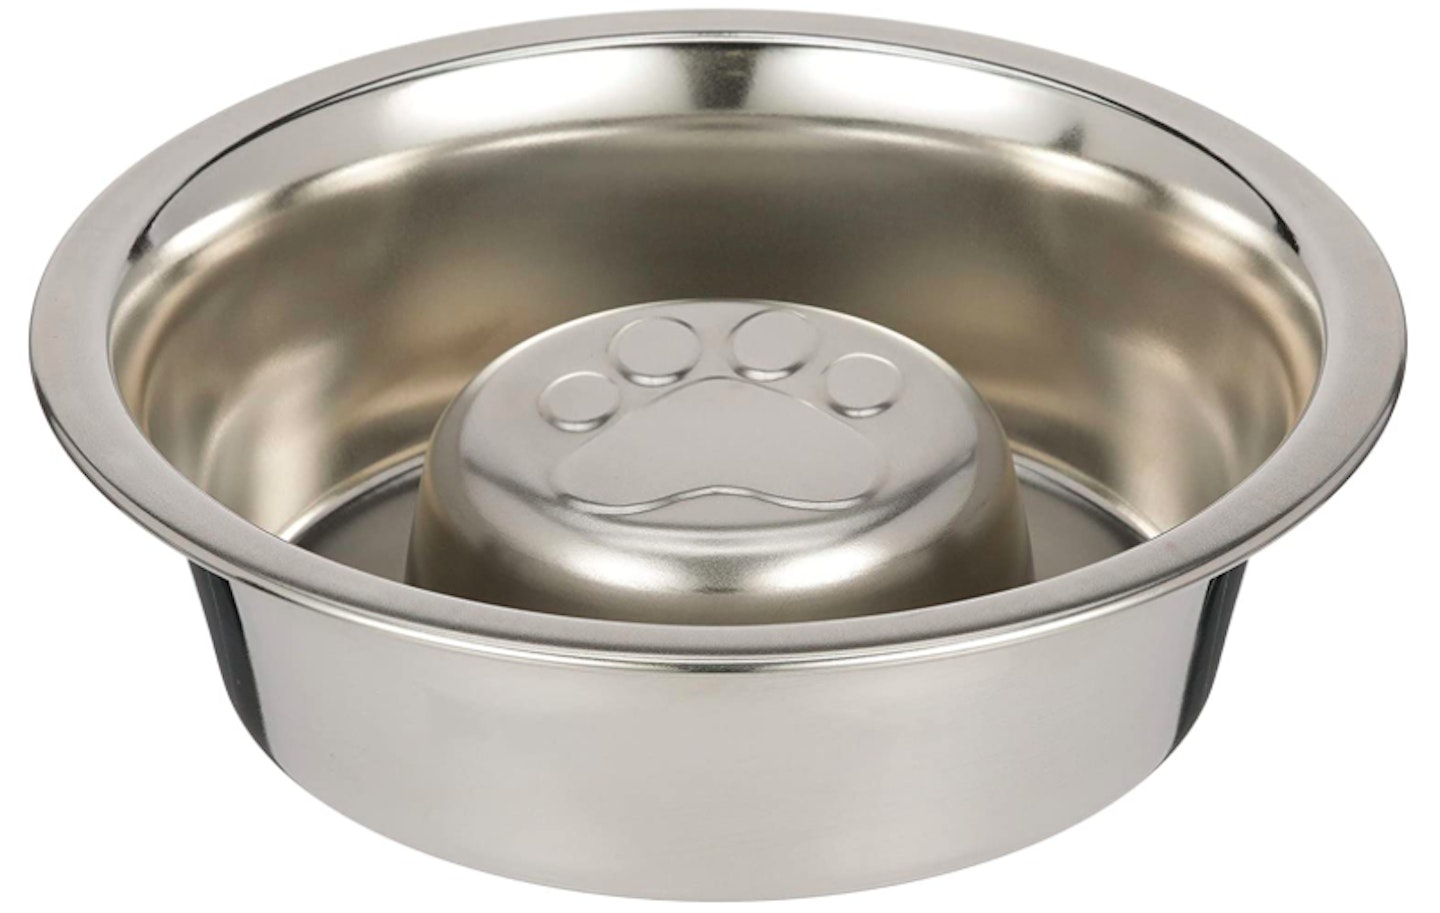 best-slow-feeder-dog-bowls